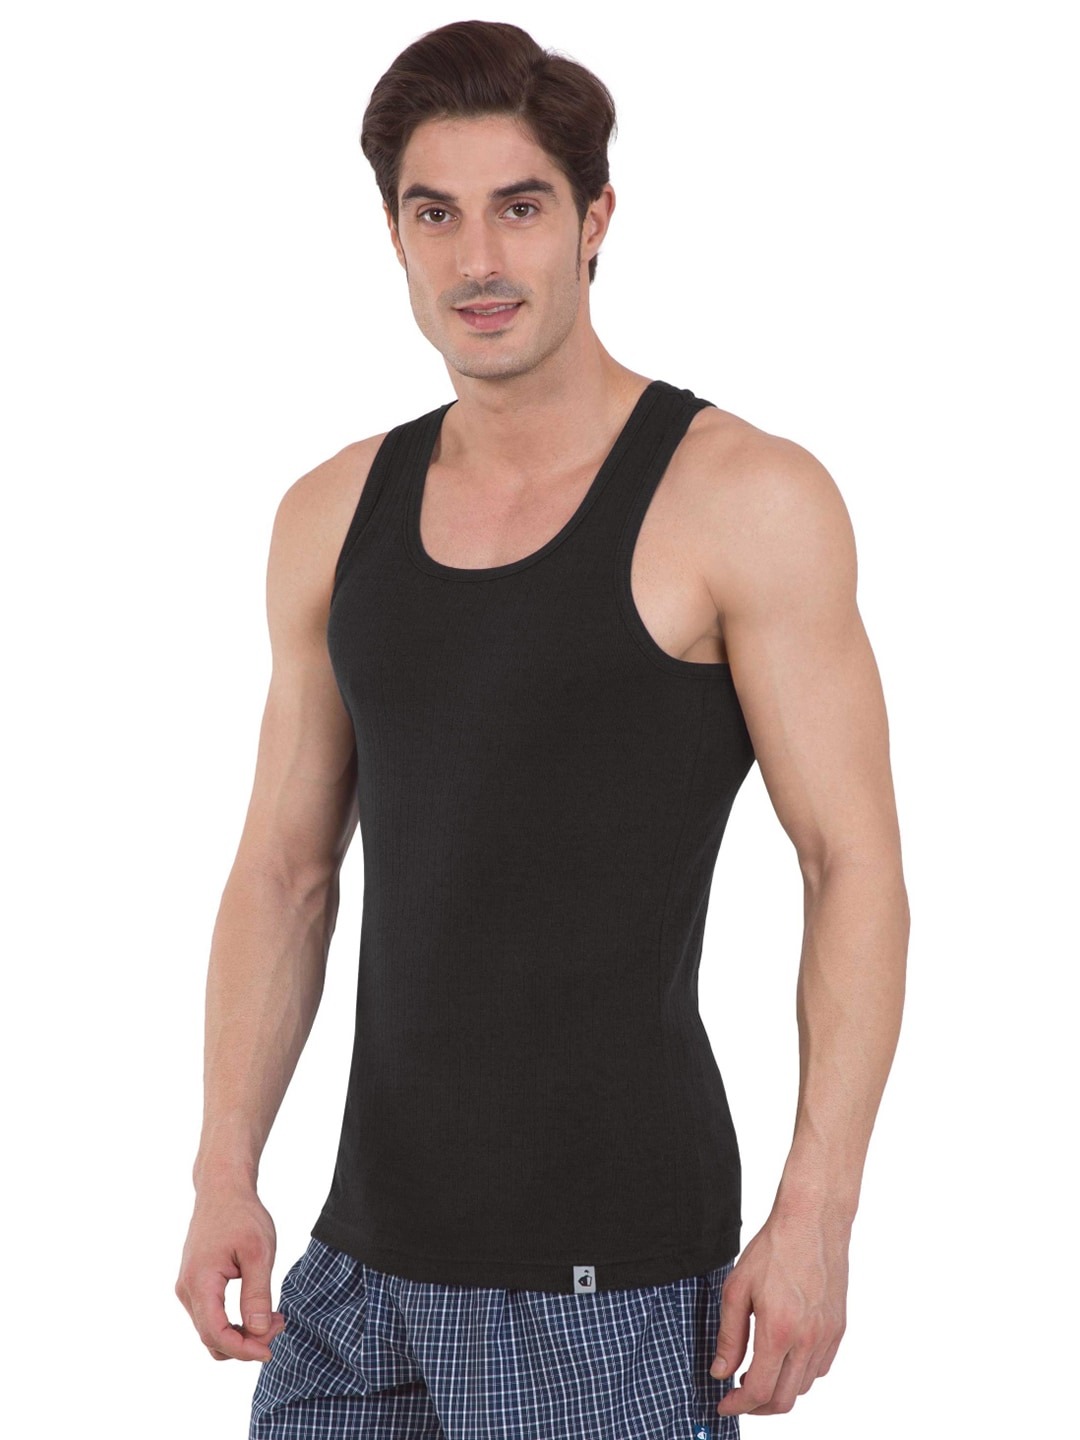 Clothing Innerwear Vests | Jockey Men Black Solid Innerwear Vests - MI16033